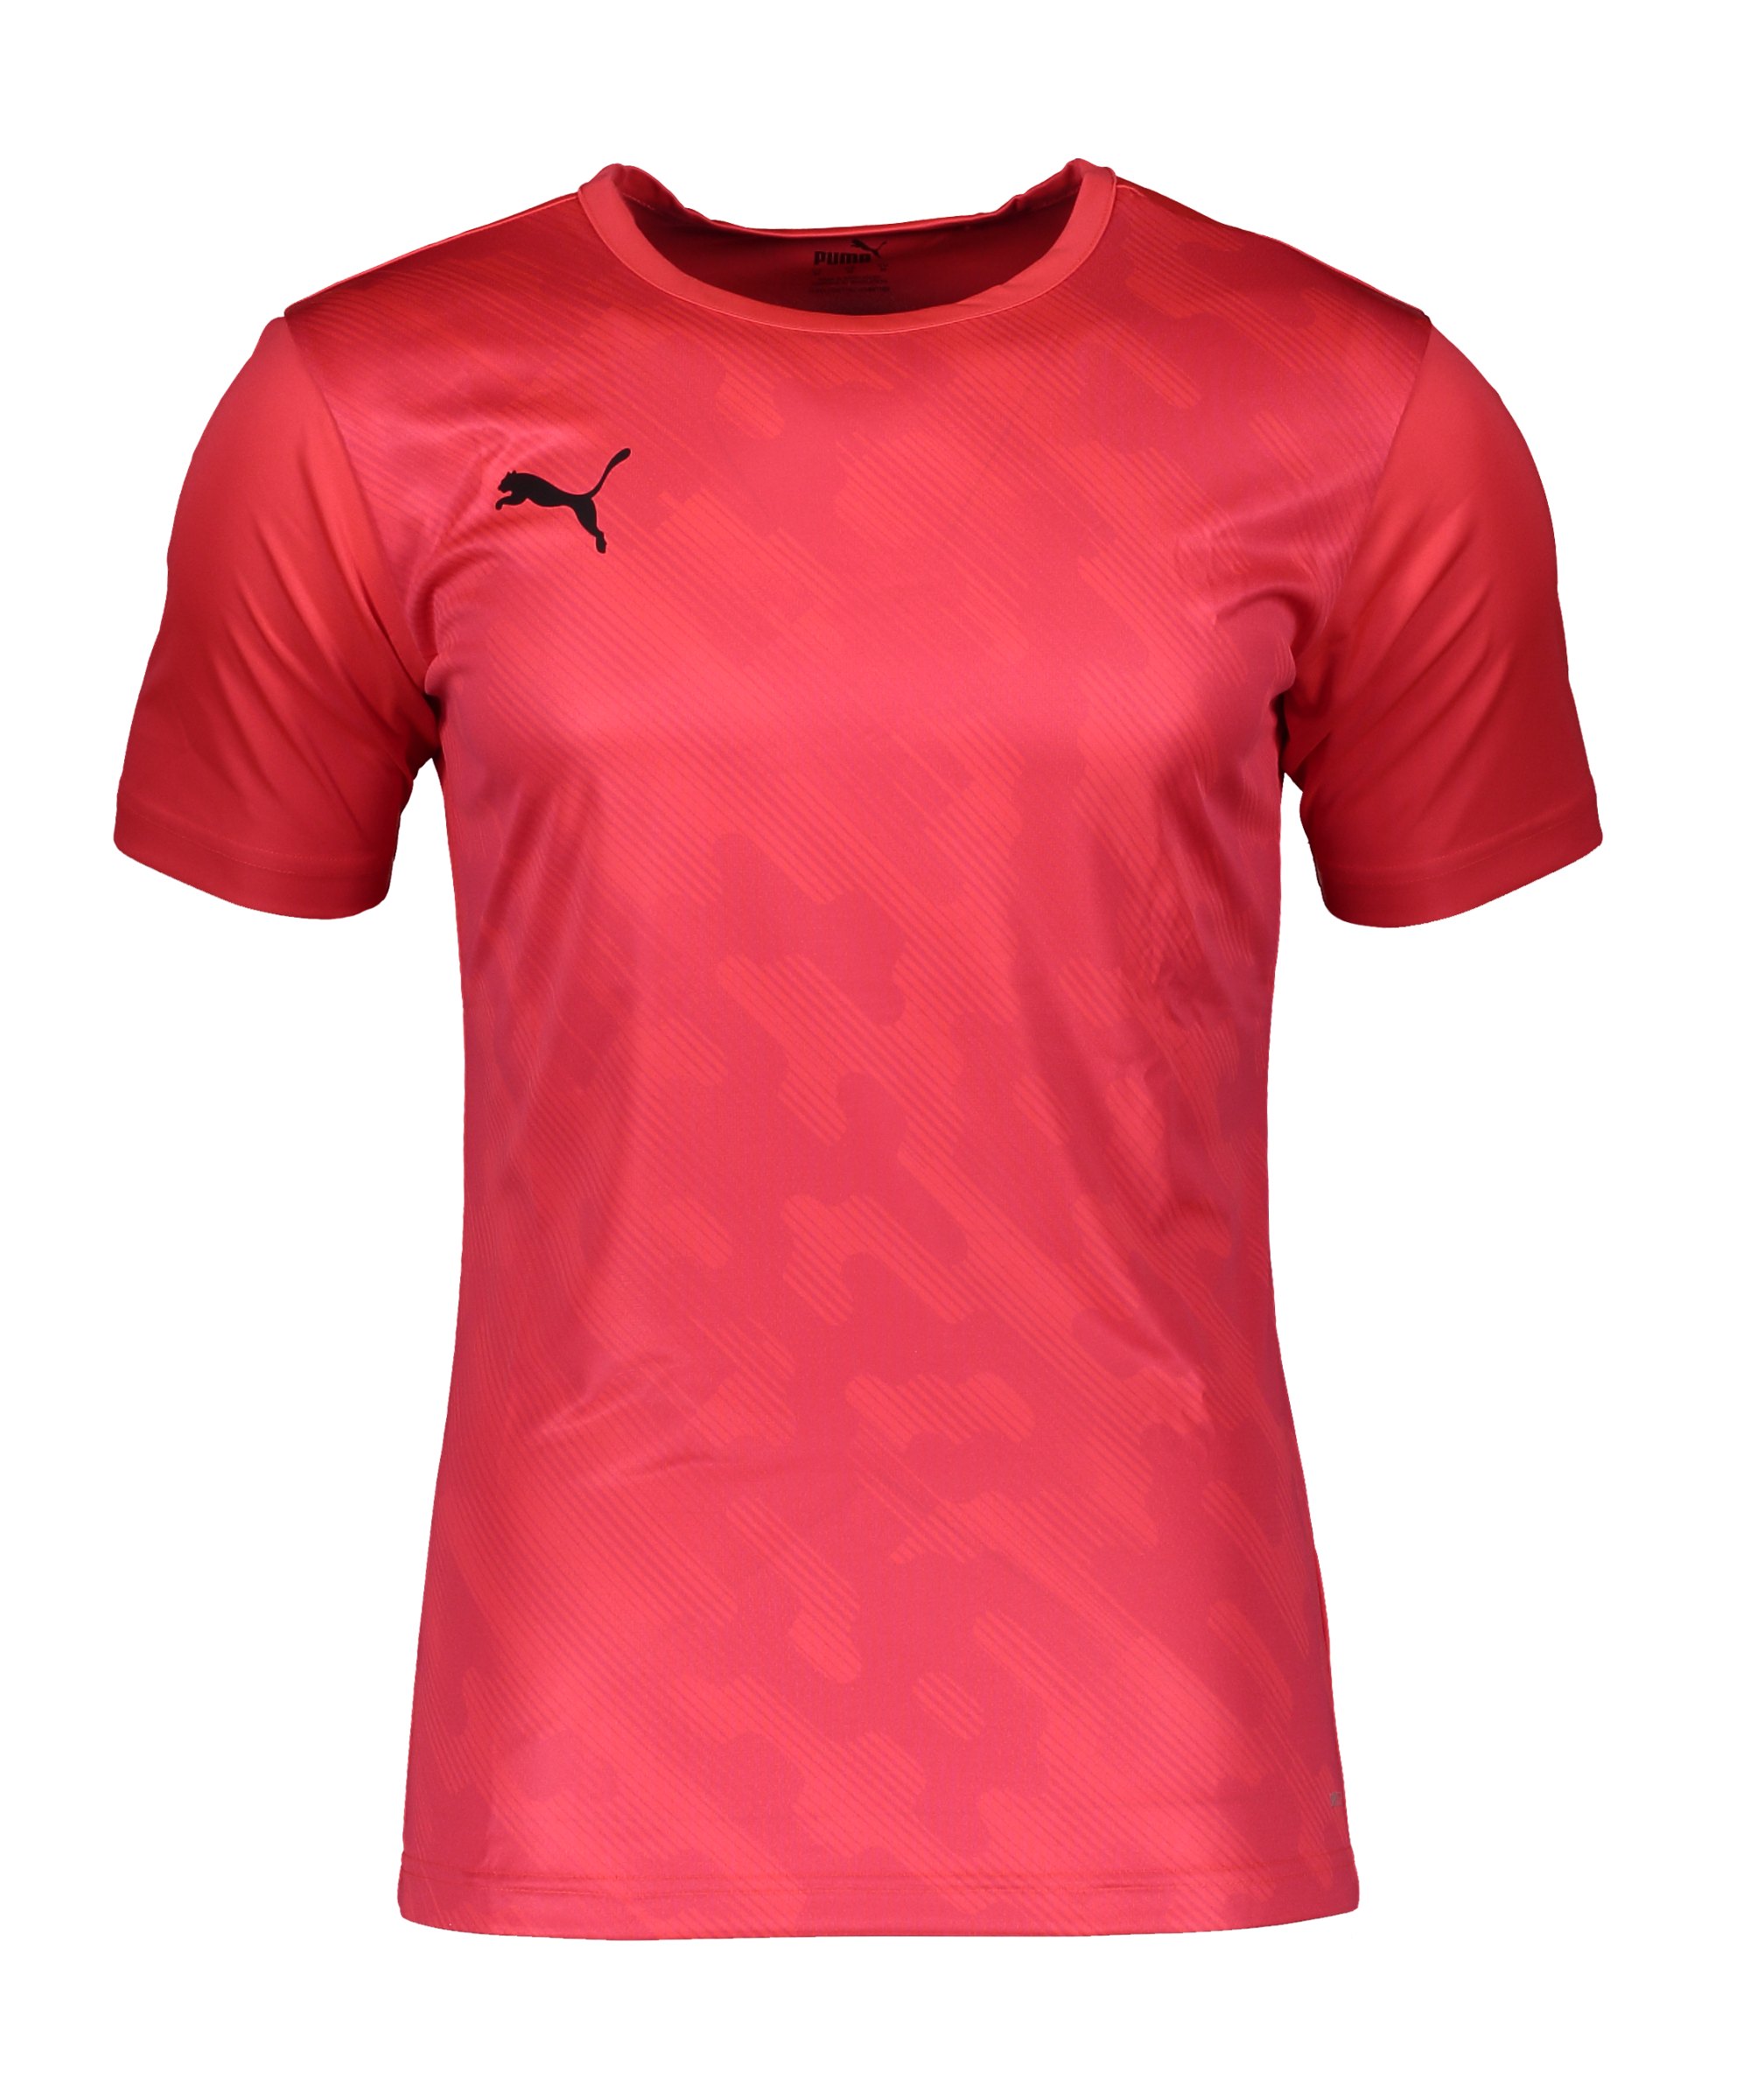 PUMA individualRISE Graphic T-Shirt Pink F43 - pink